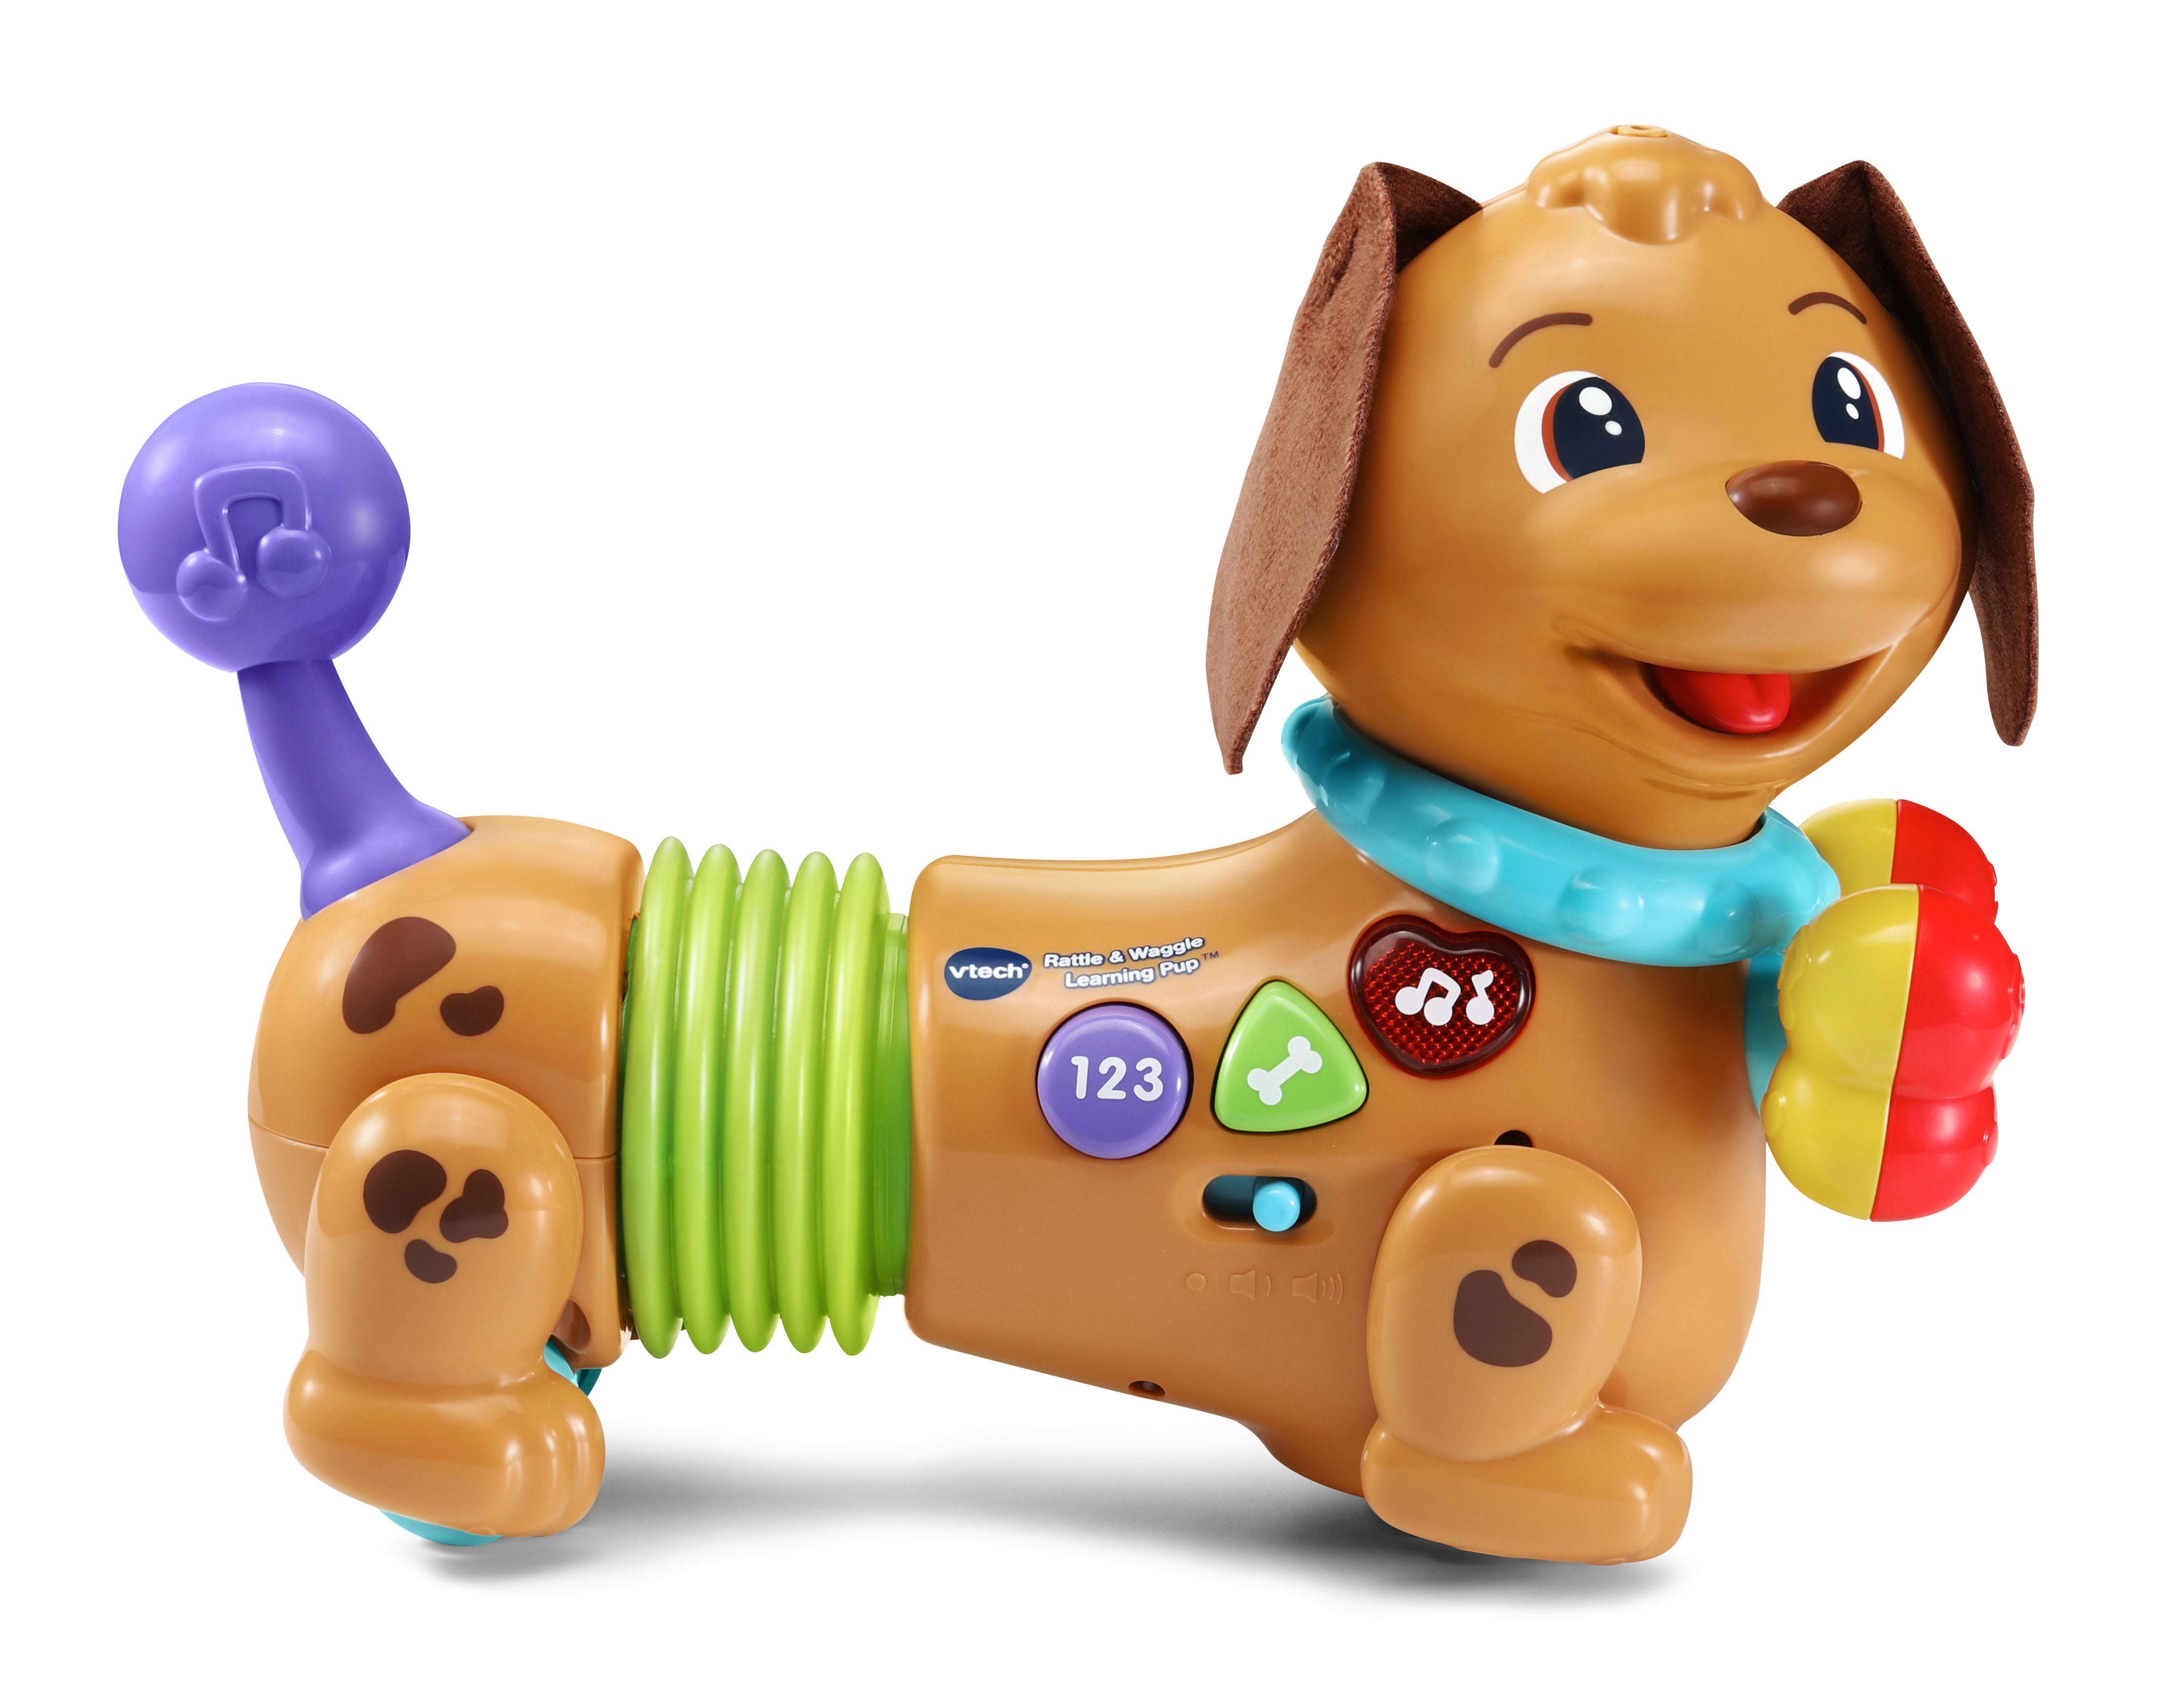 Wooden puzzle dog handmade dachshund animal toy gift for children massive beech wood toy dogi pet black white dog